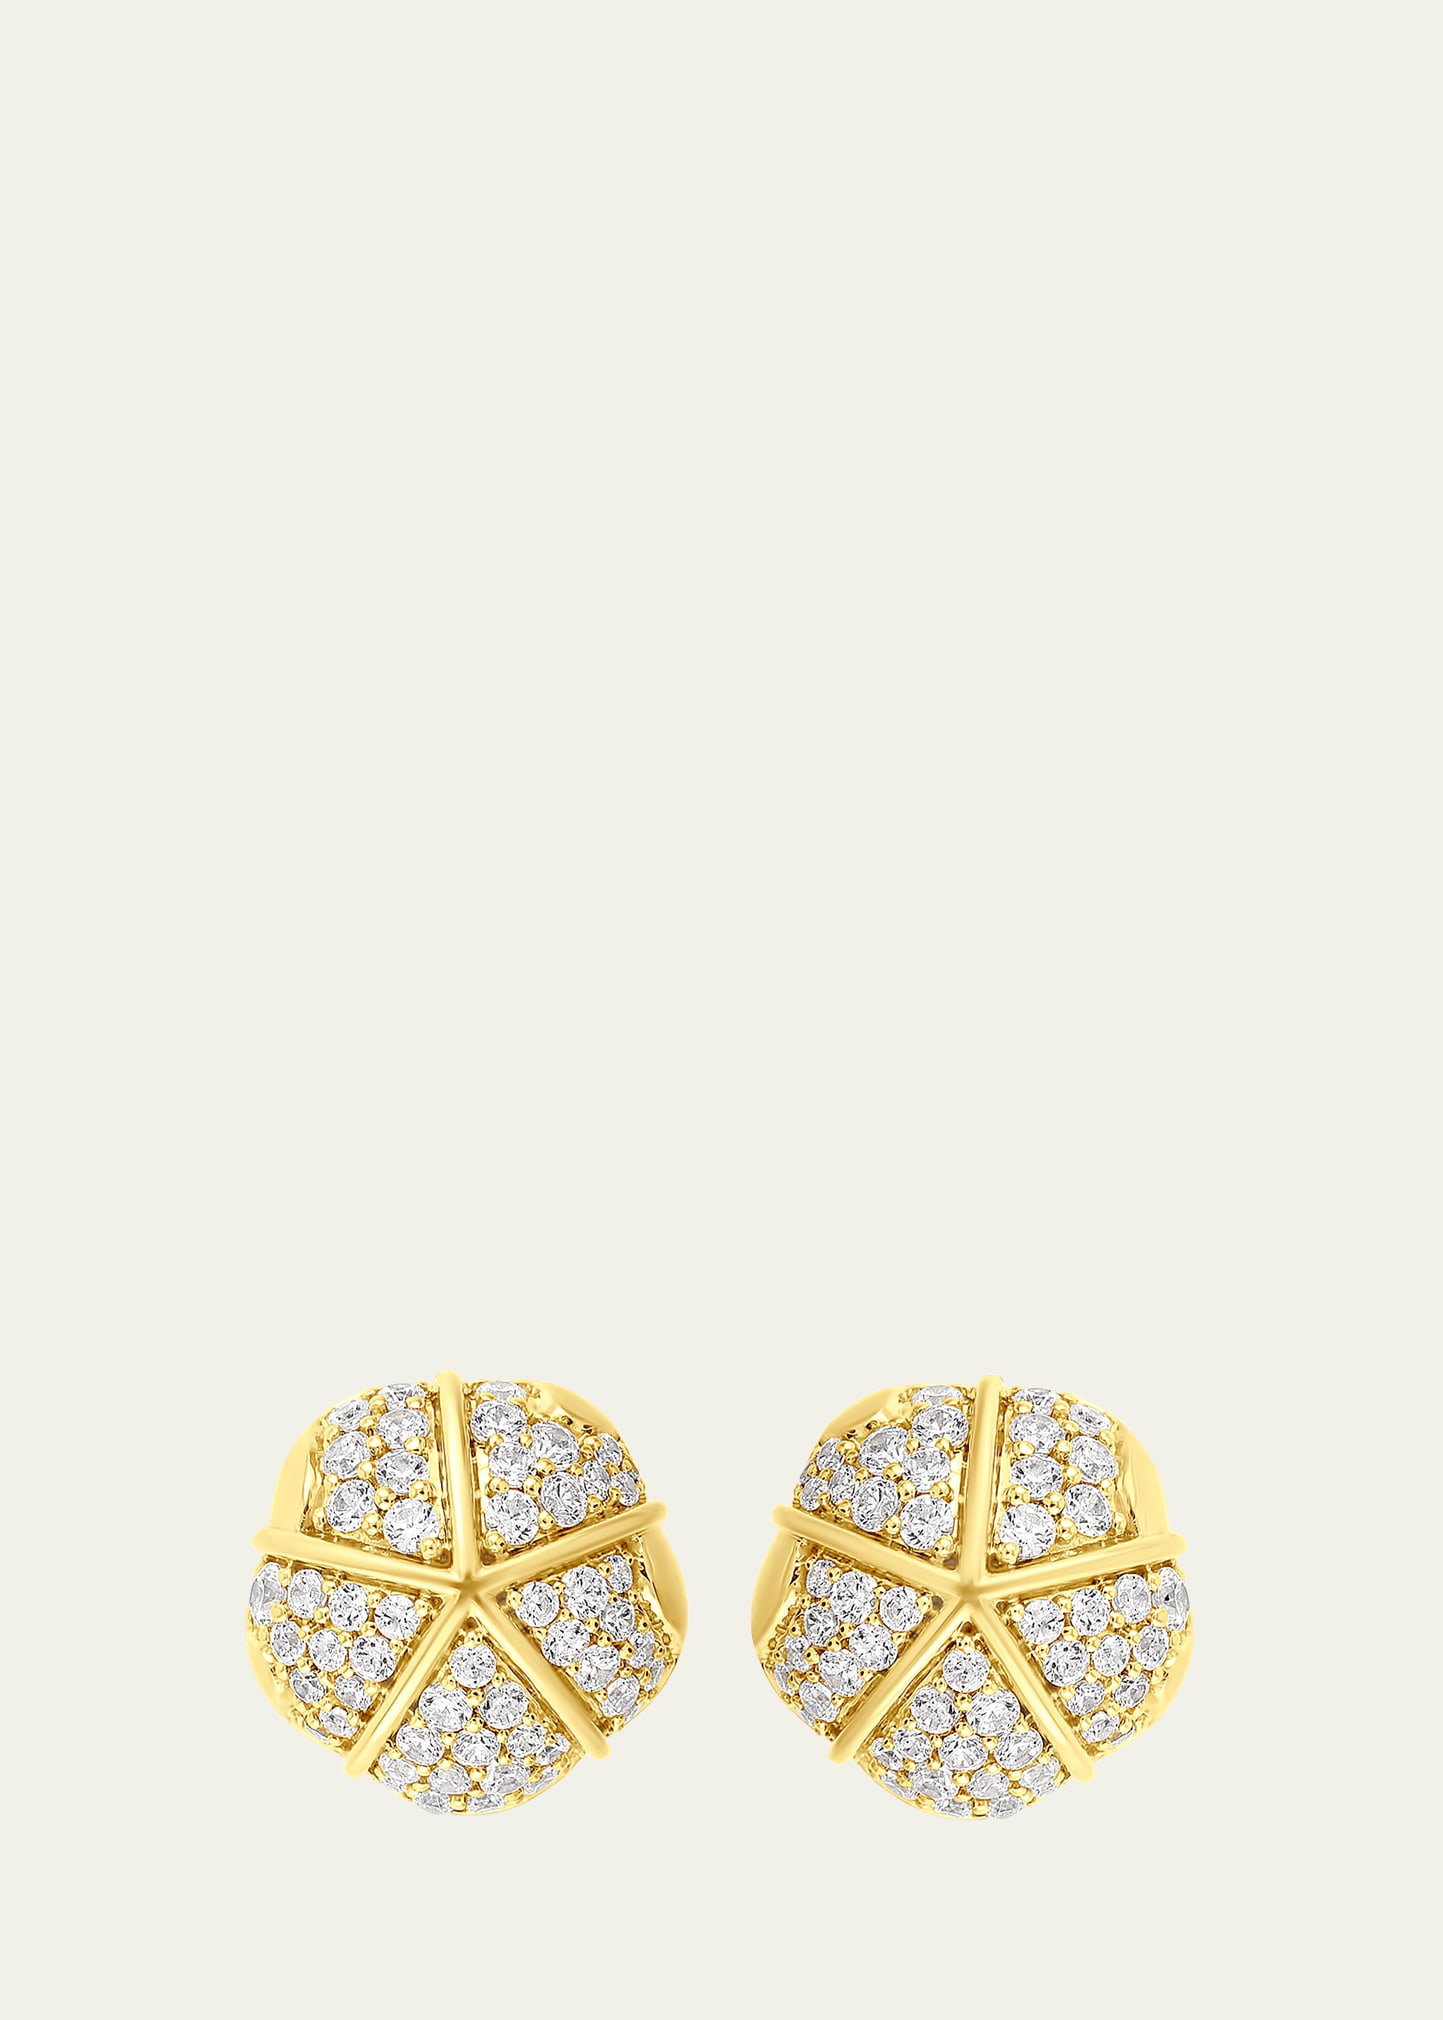 Almasika 18k Yellow Gold Terra Nova Grande Pave Stud Earrings With White Diamonds